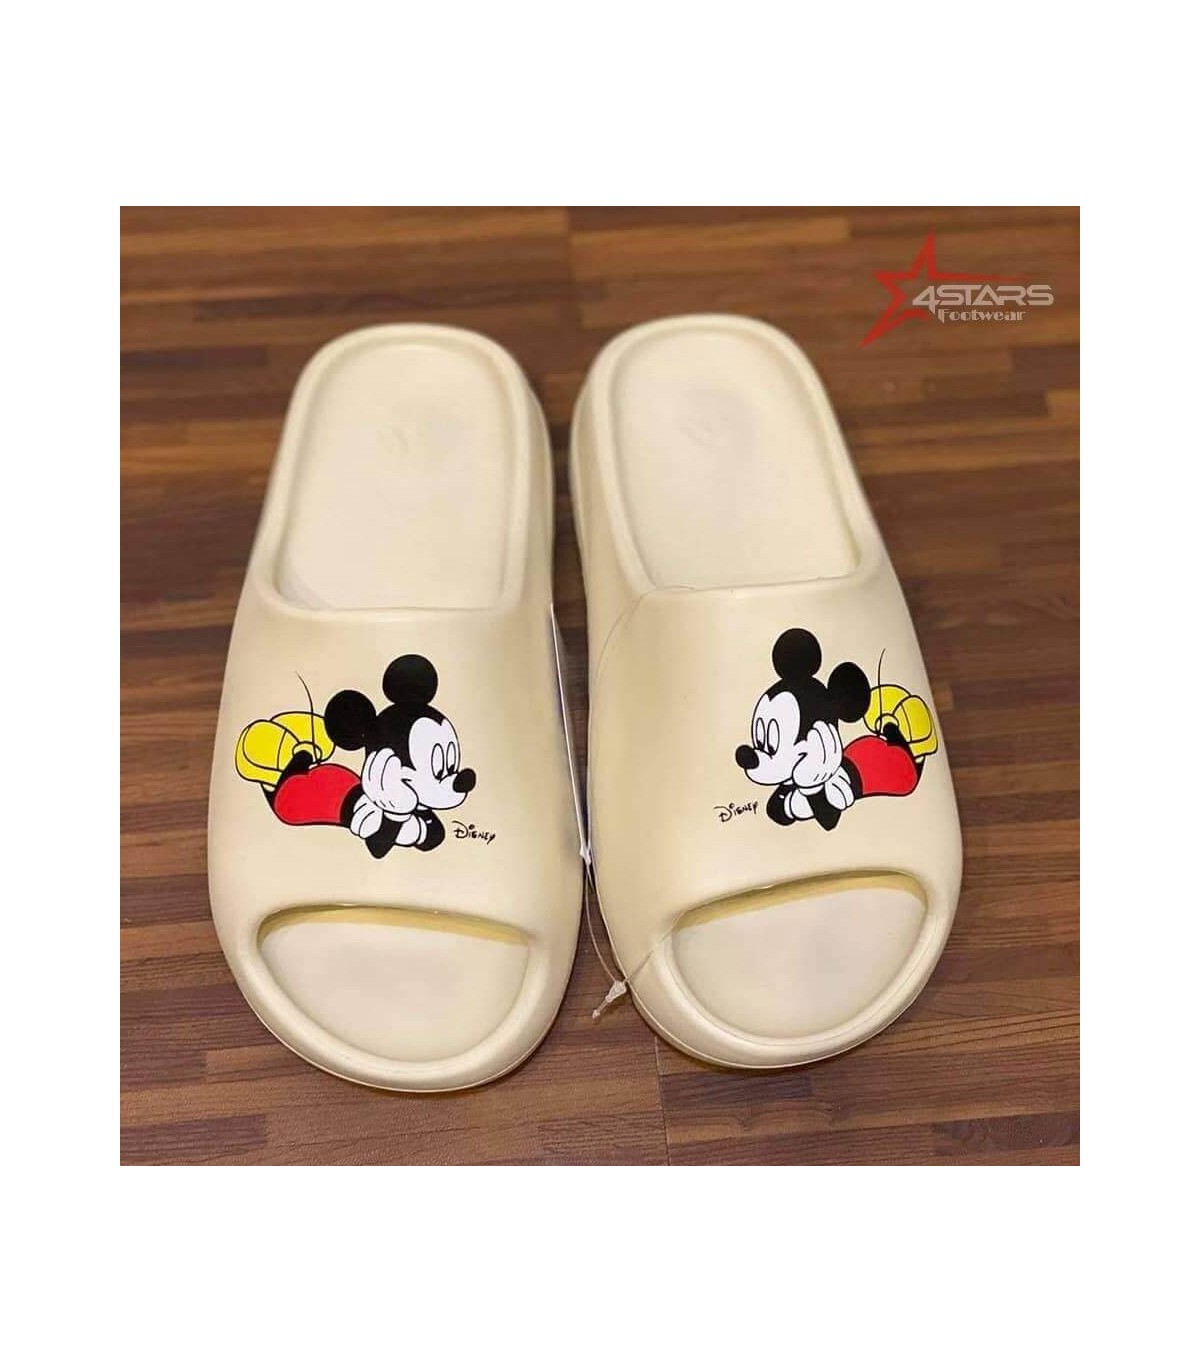 Adidas Custom Yeezy Slides "Disney"